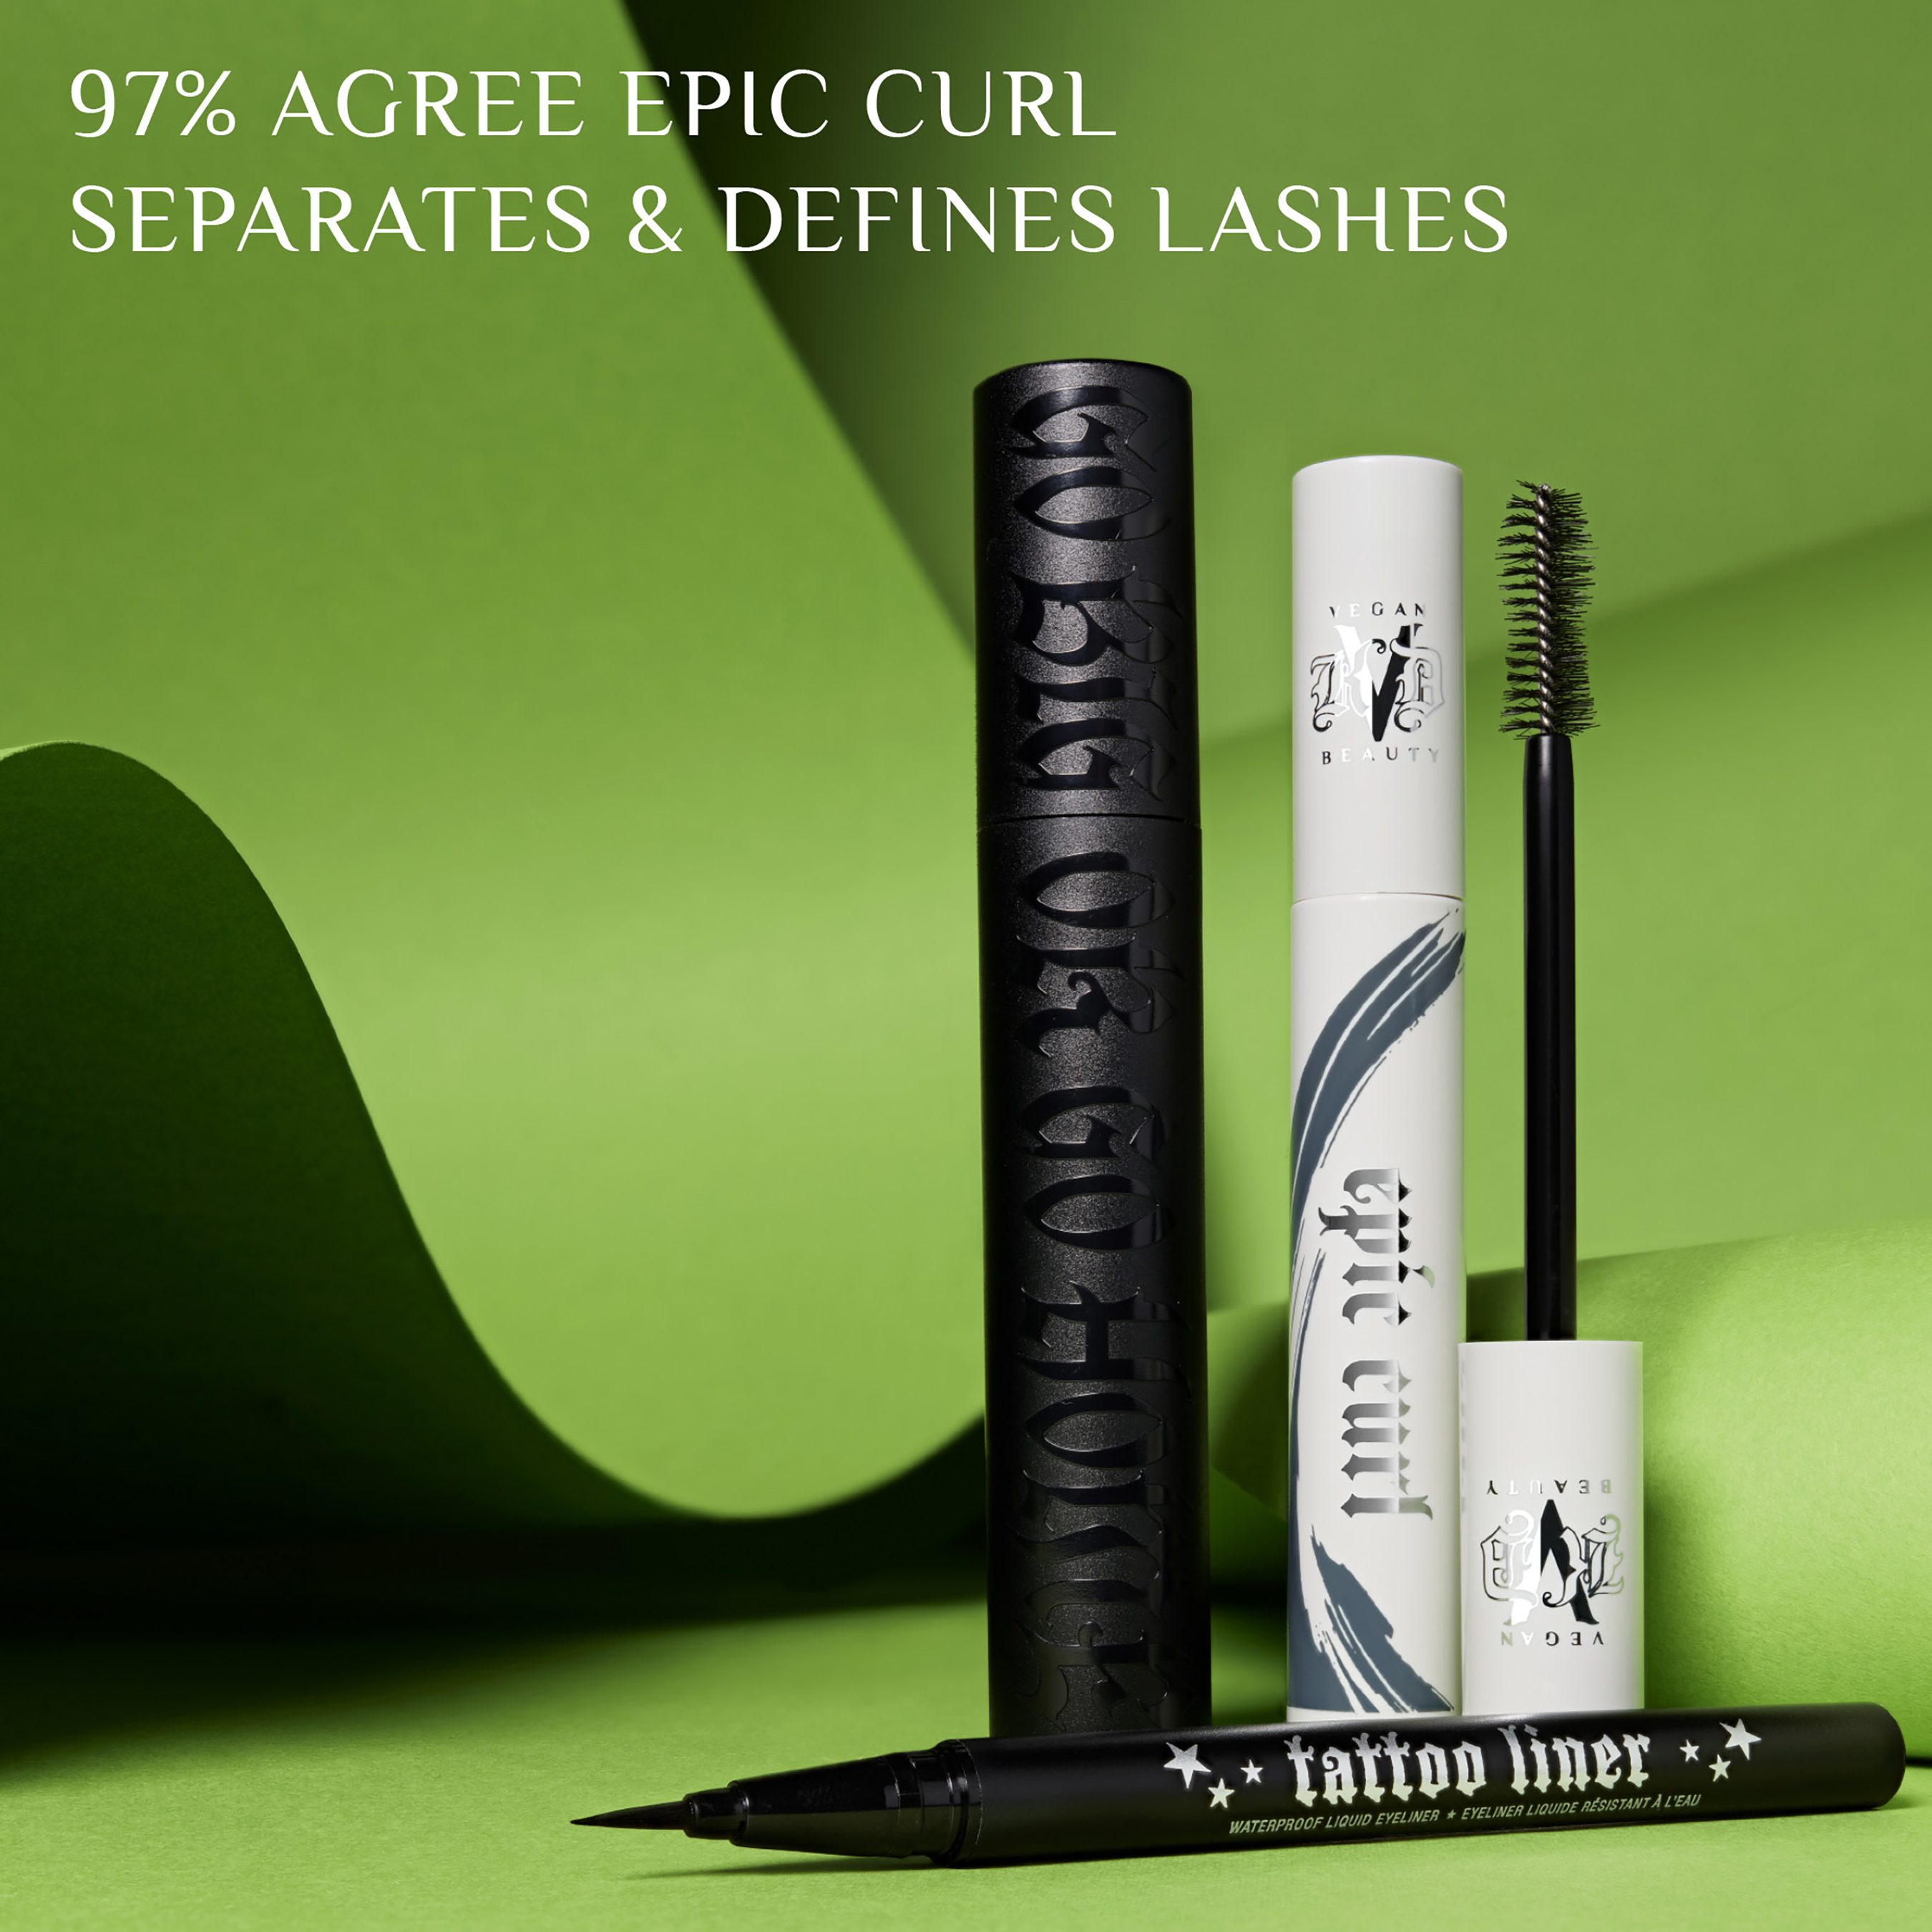 Product shot of new Epic Curl Lash Primer